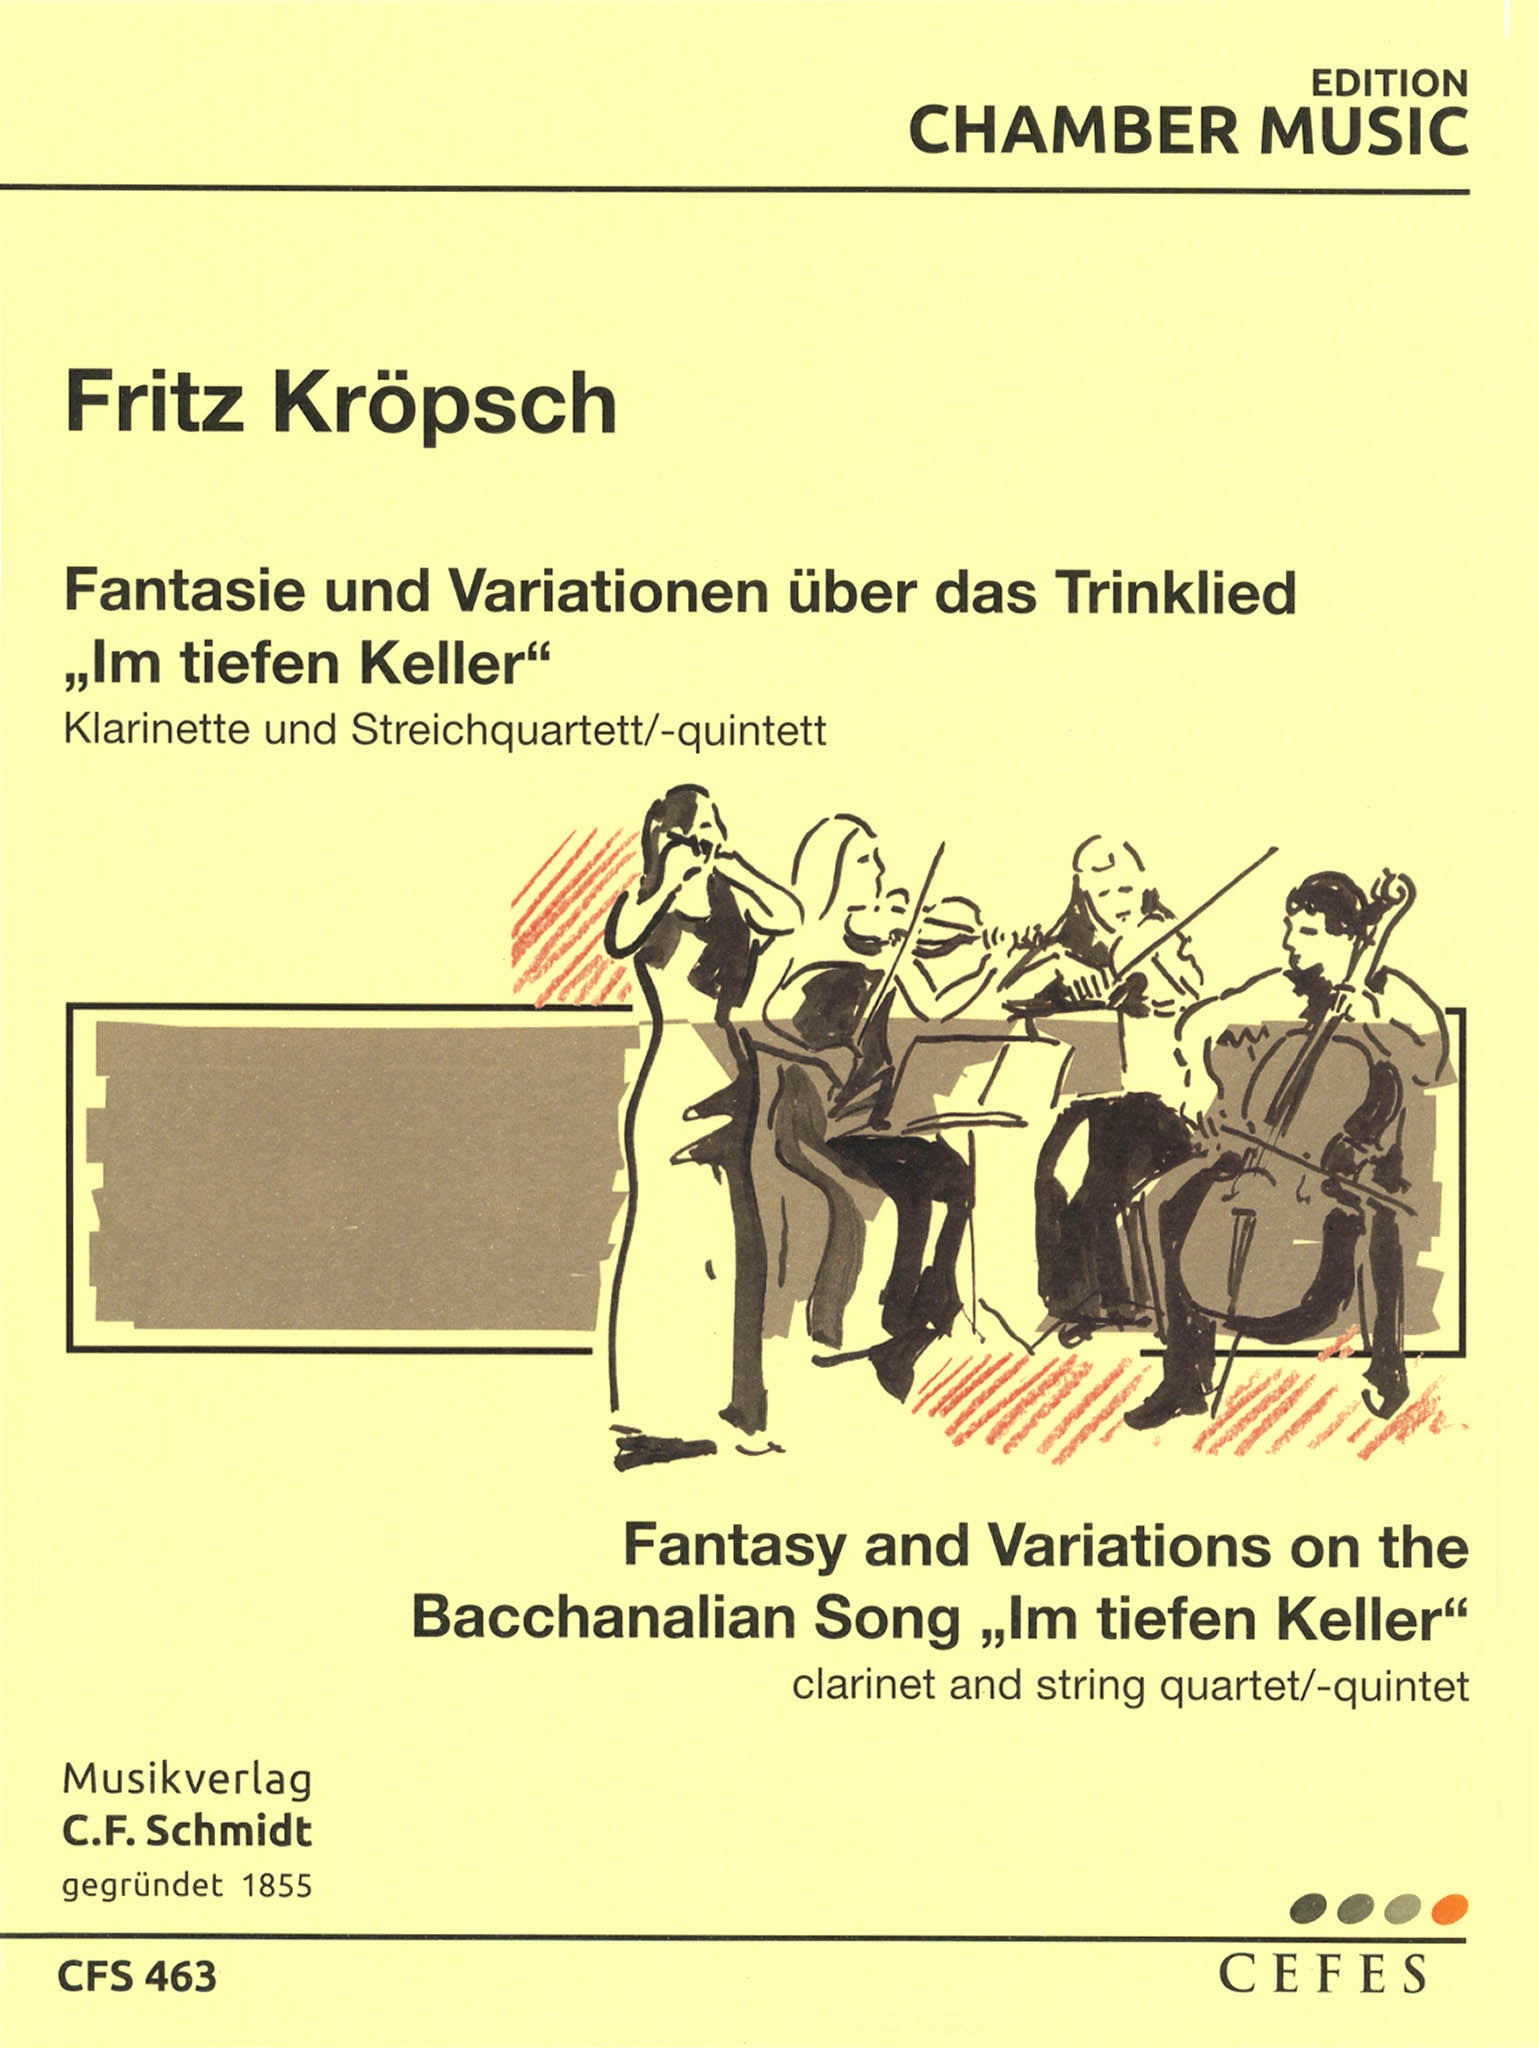 Kroepsch Fantasy Im tiefen Keller clarinet and strings cover